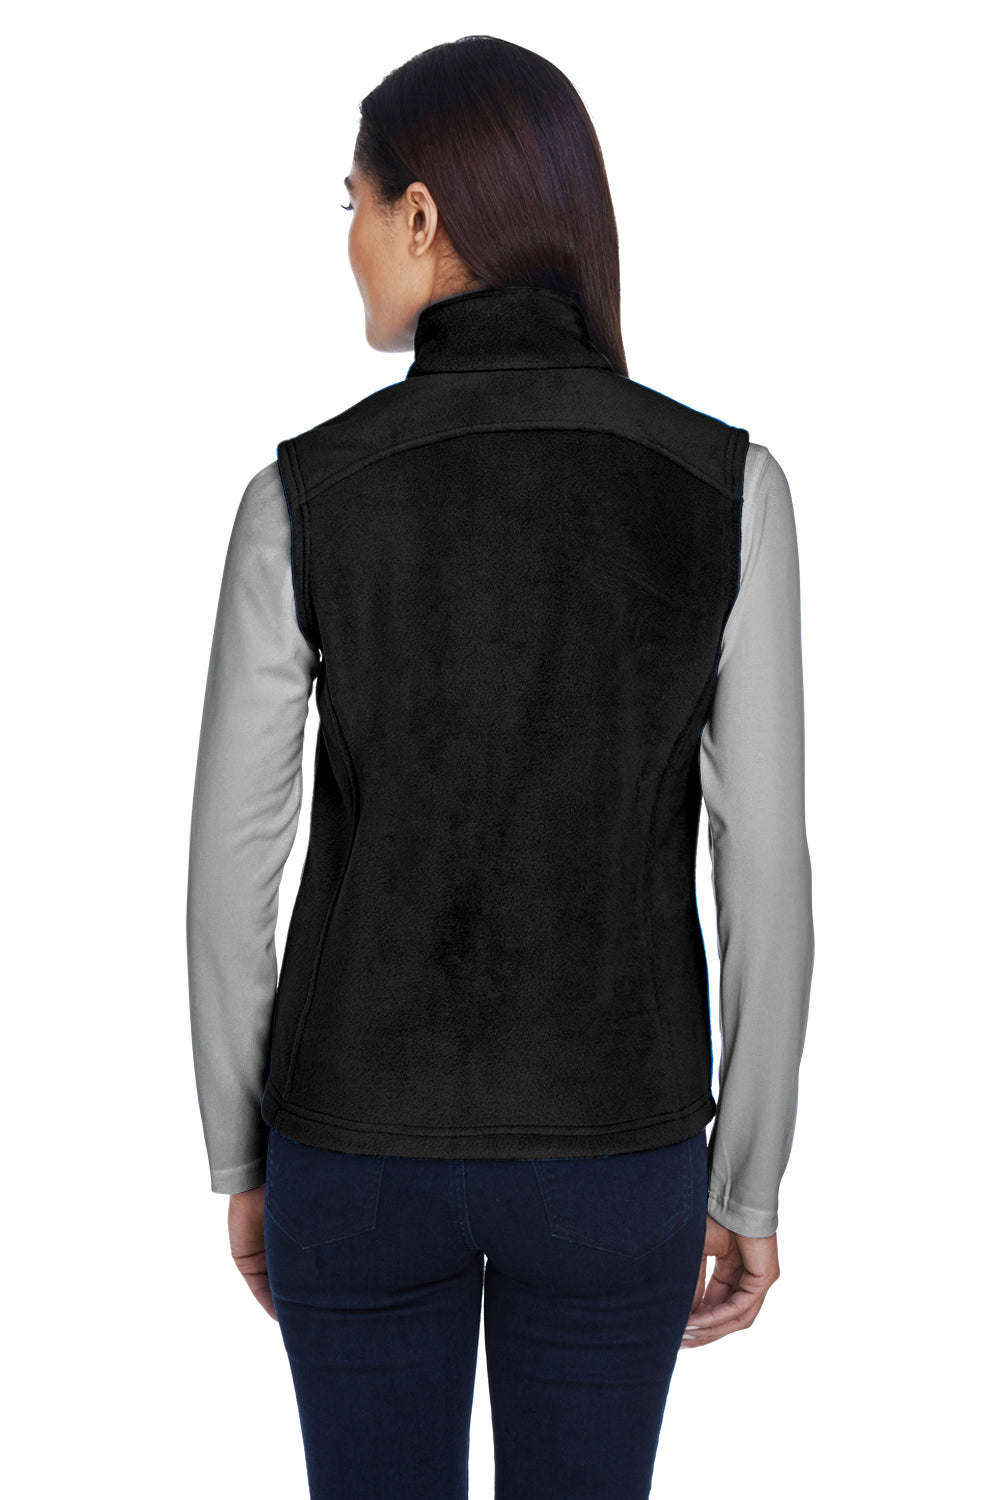 Core 365 78191 Womens Journey Full Zip Fleece Vest Black Back